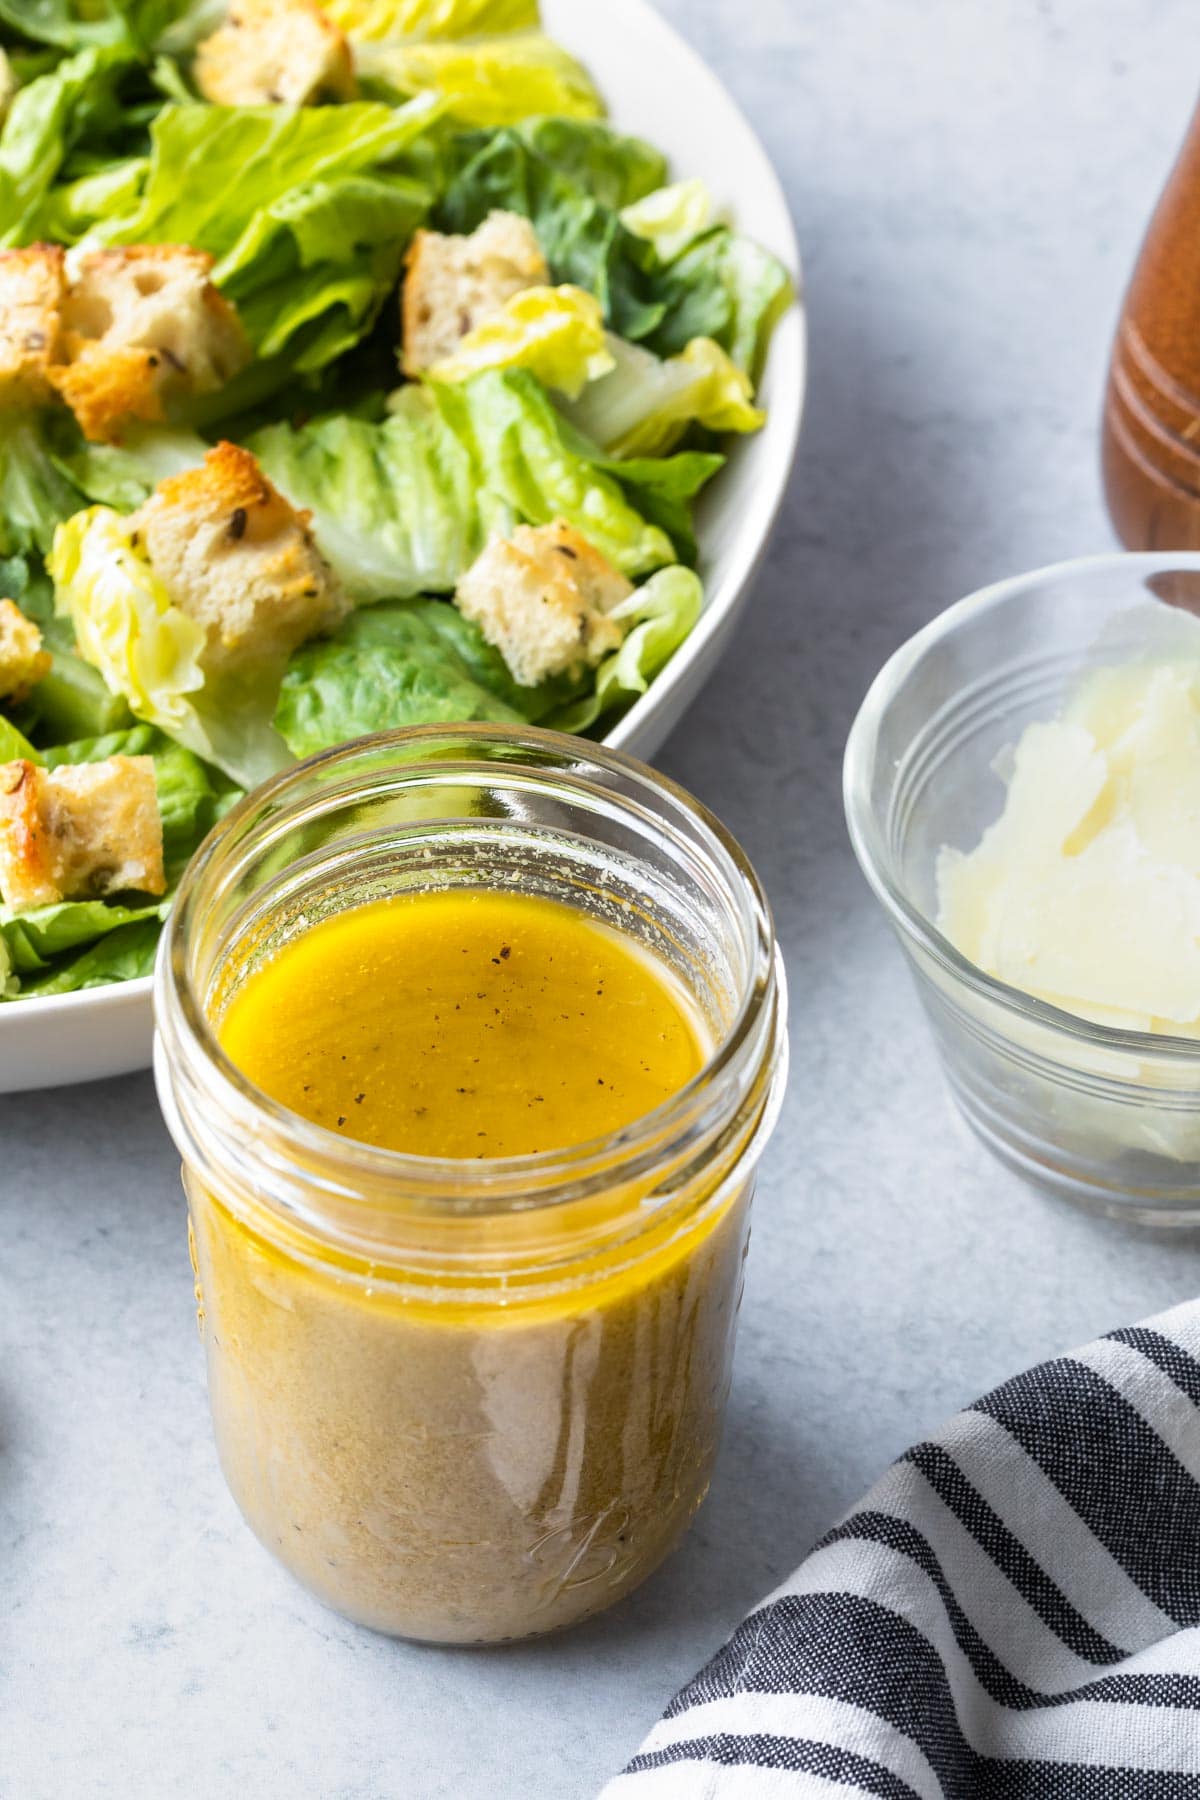 Best Homemade Caesar Salad Dressing Recipe